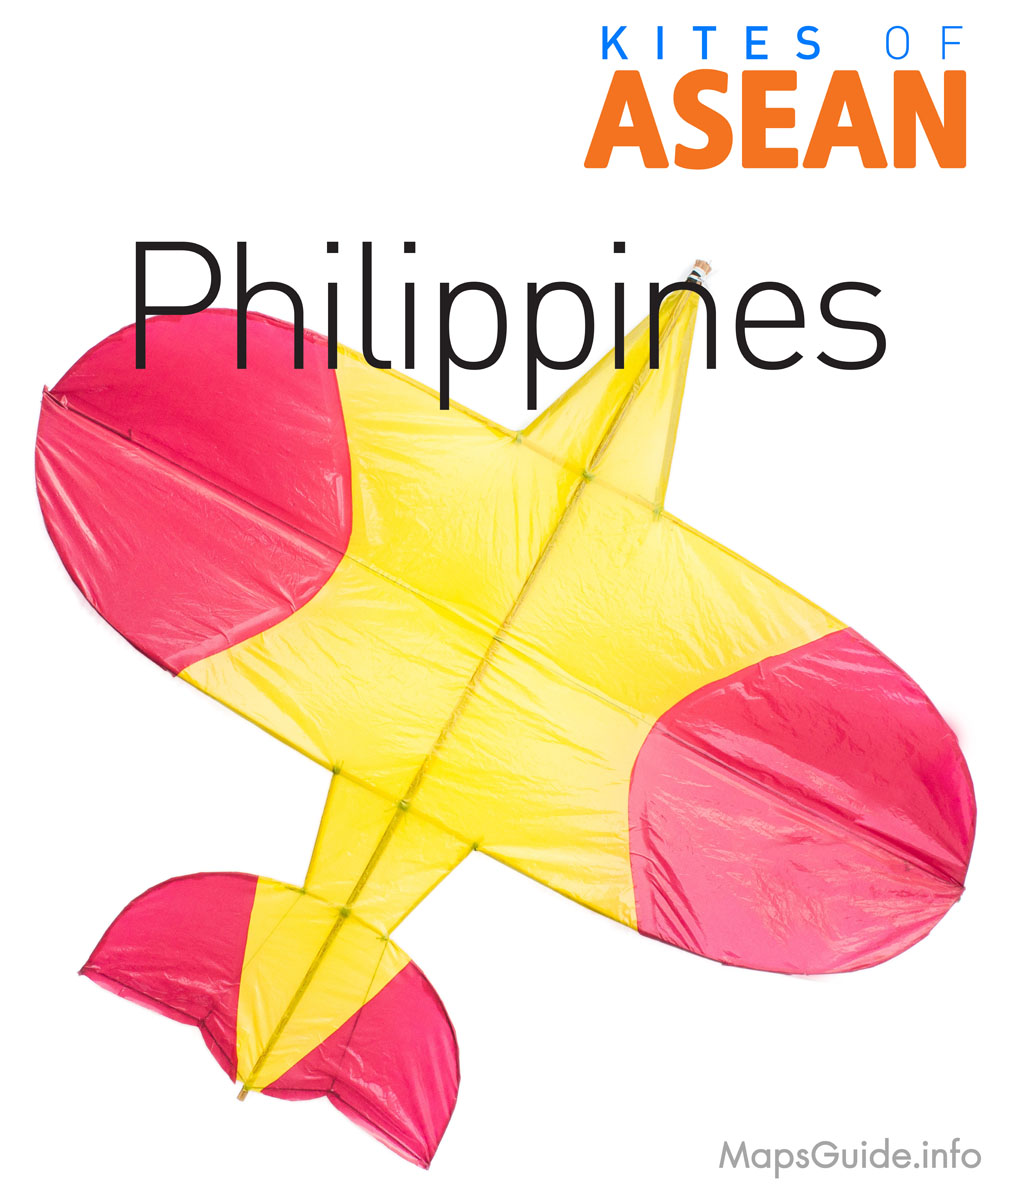 ASEAN KITE POSTERS-3_1